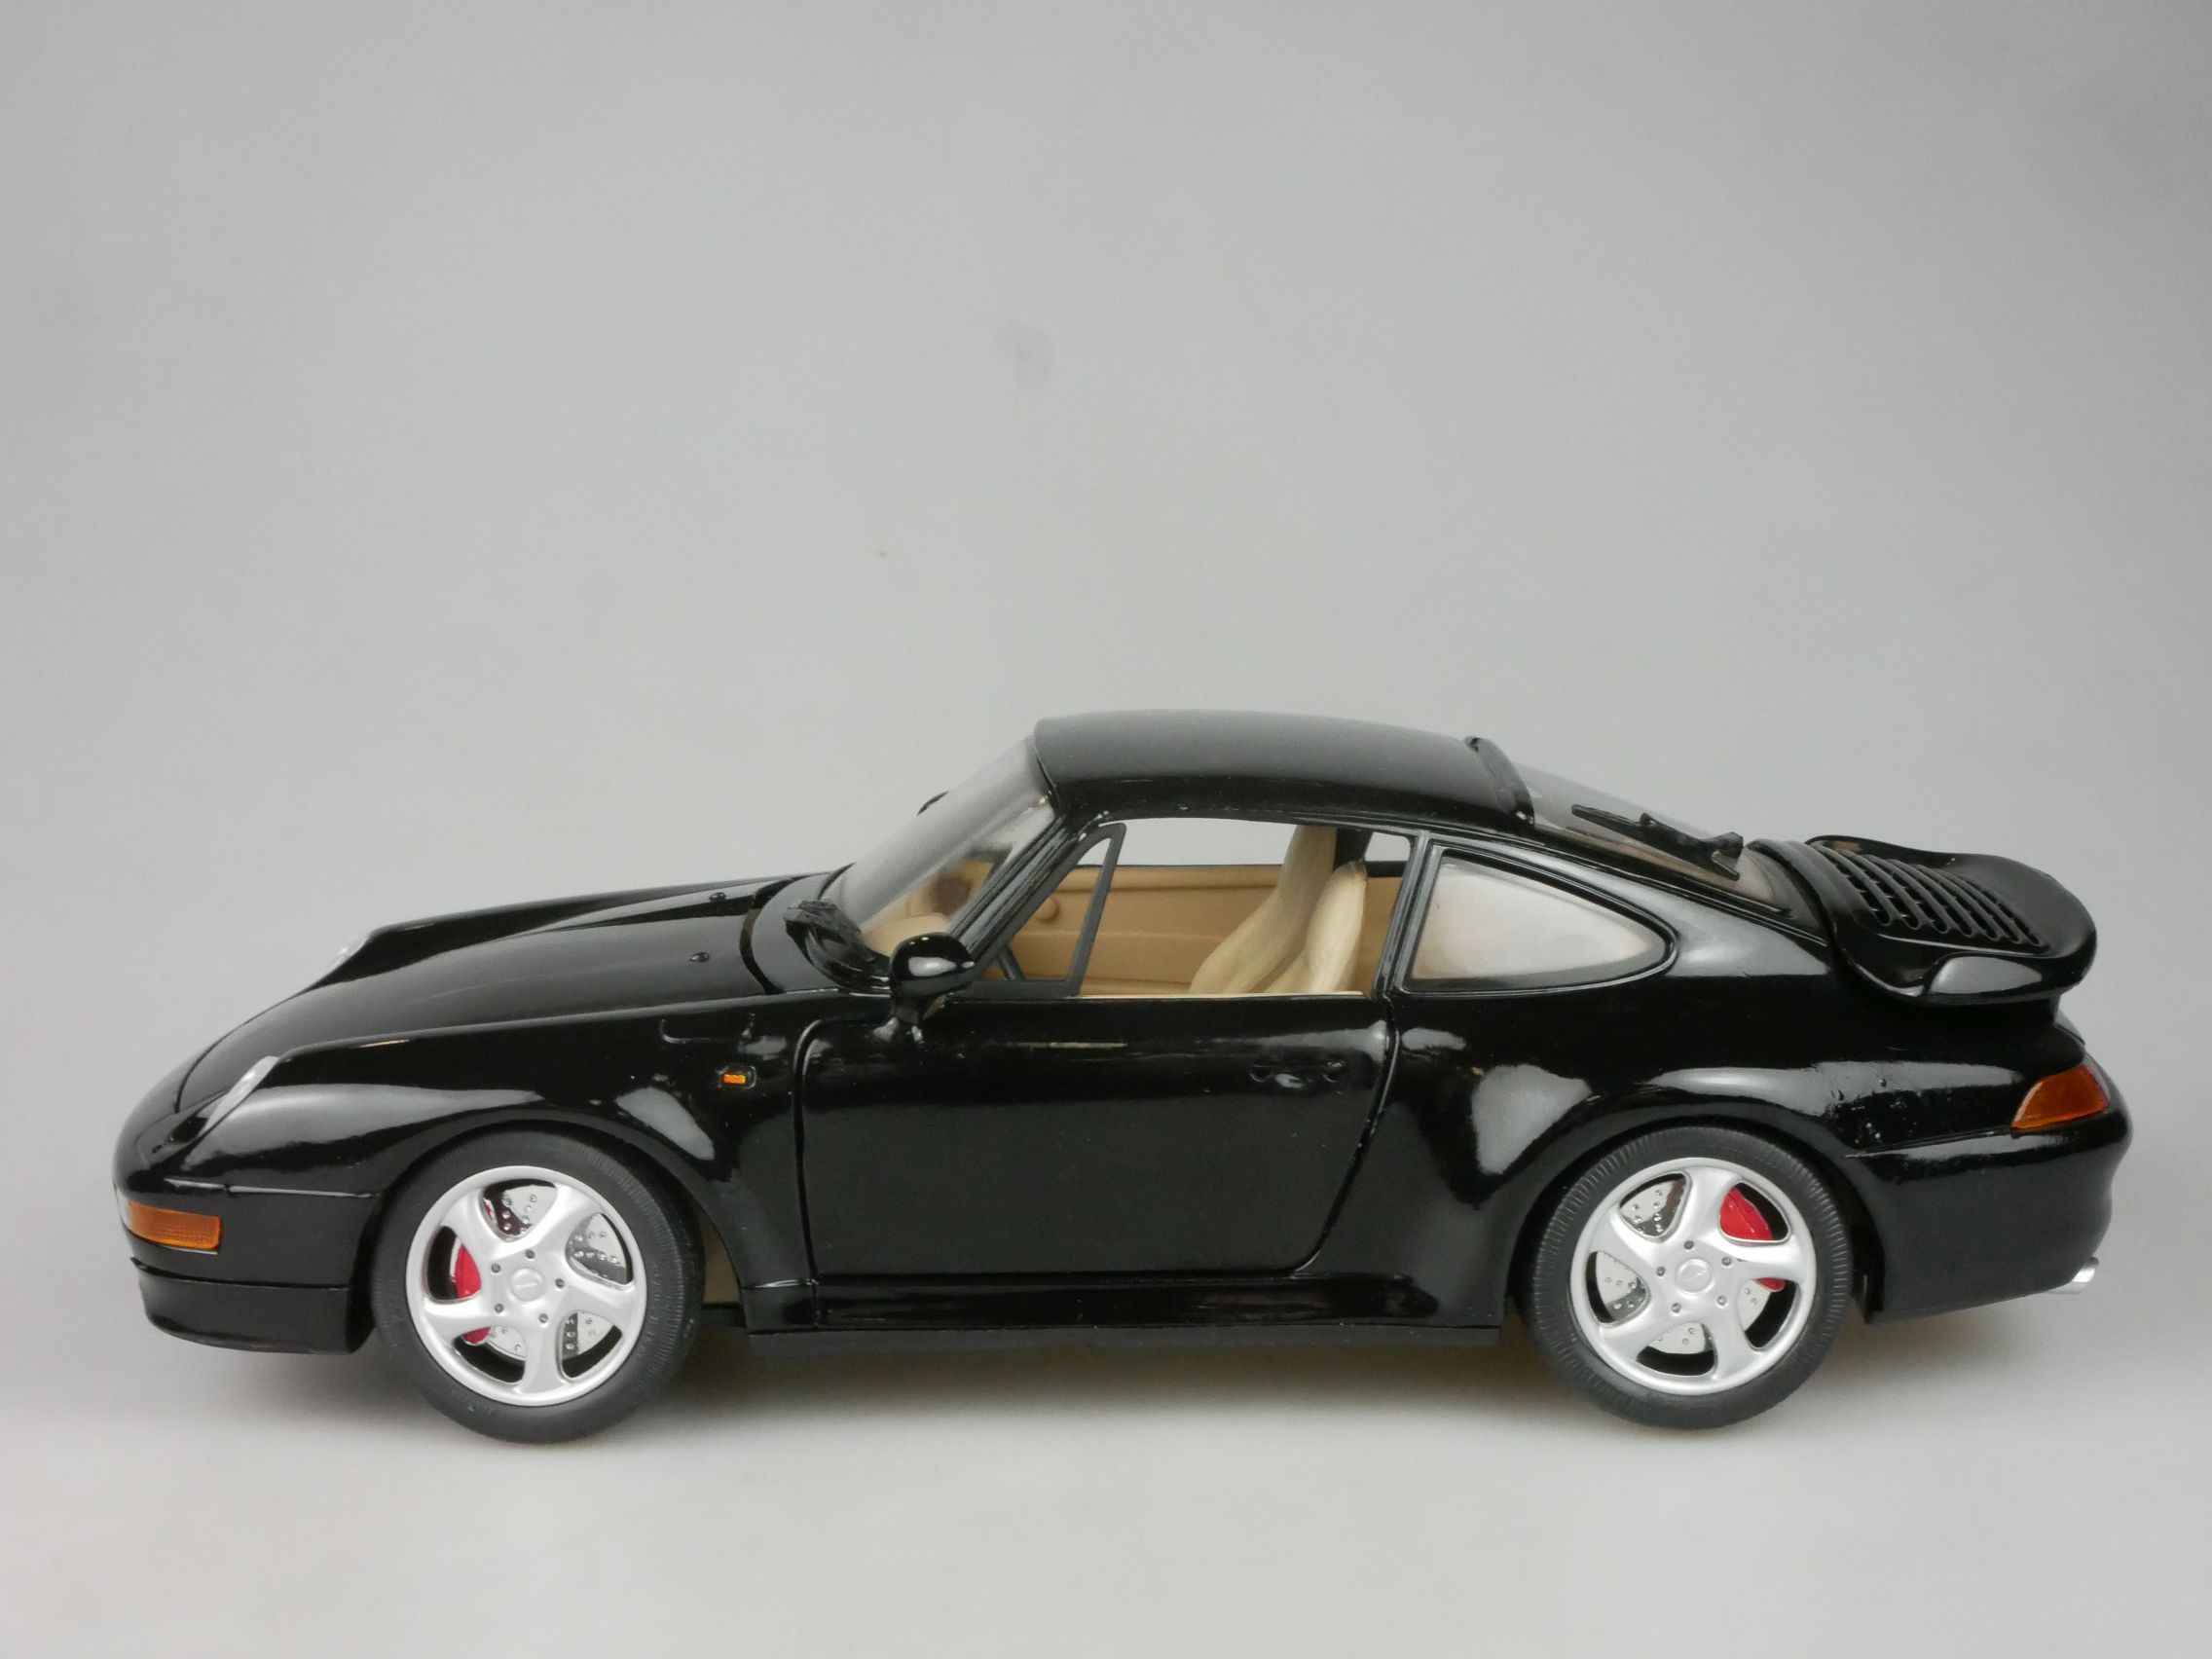 Anson 1/18 Porsche 911 turbo black - diecast model 126779